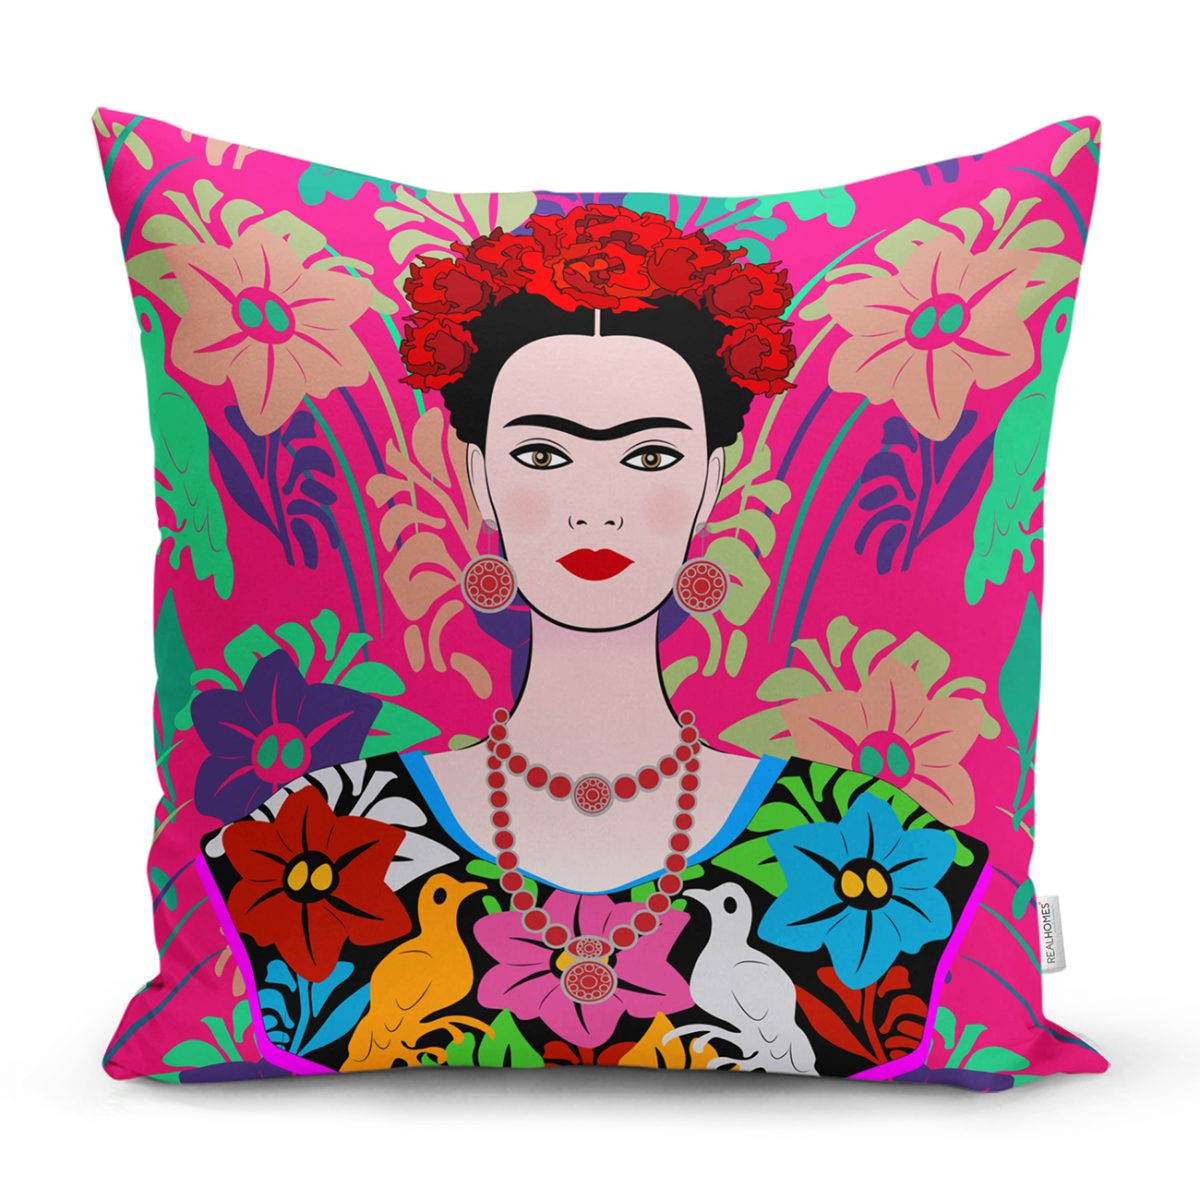 Fuşya Zeminde Frida Kahlo Motifli Özel Tasarım Kırlent Kılıfı Realhomes